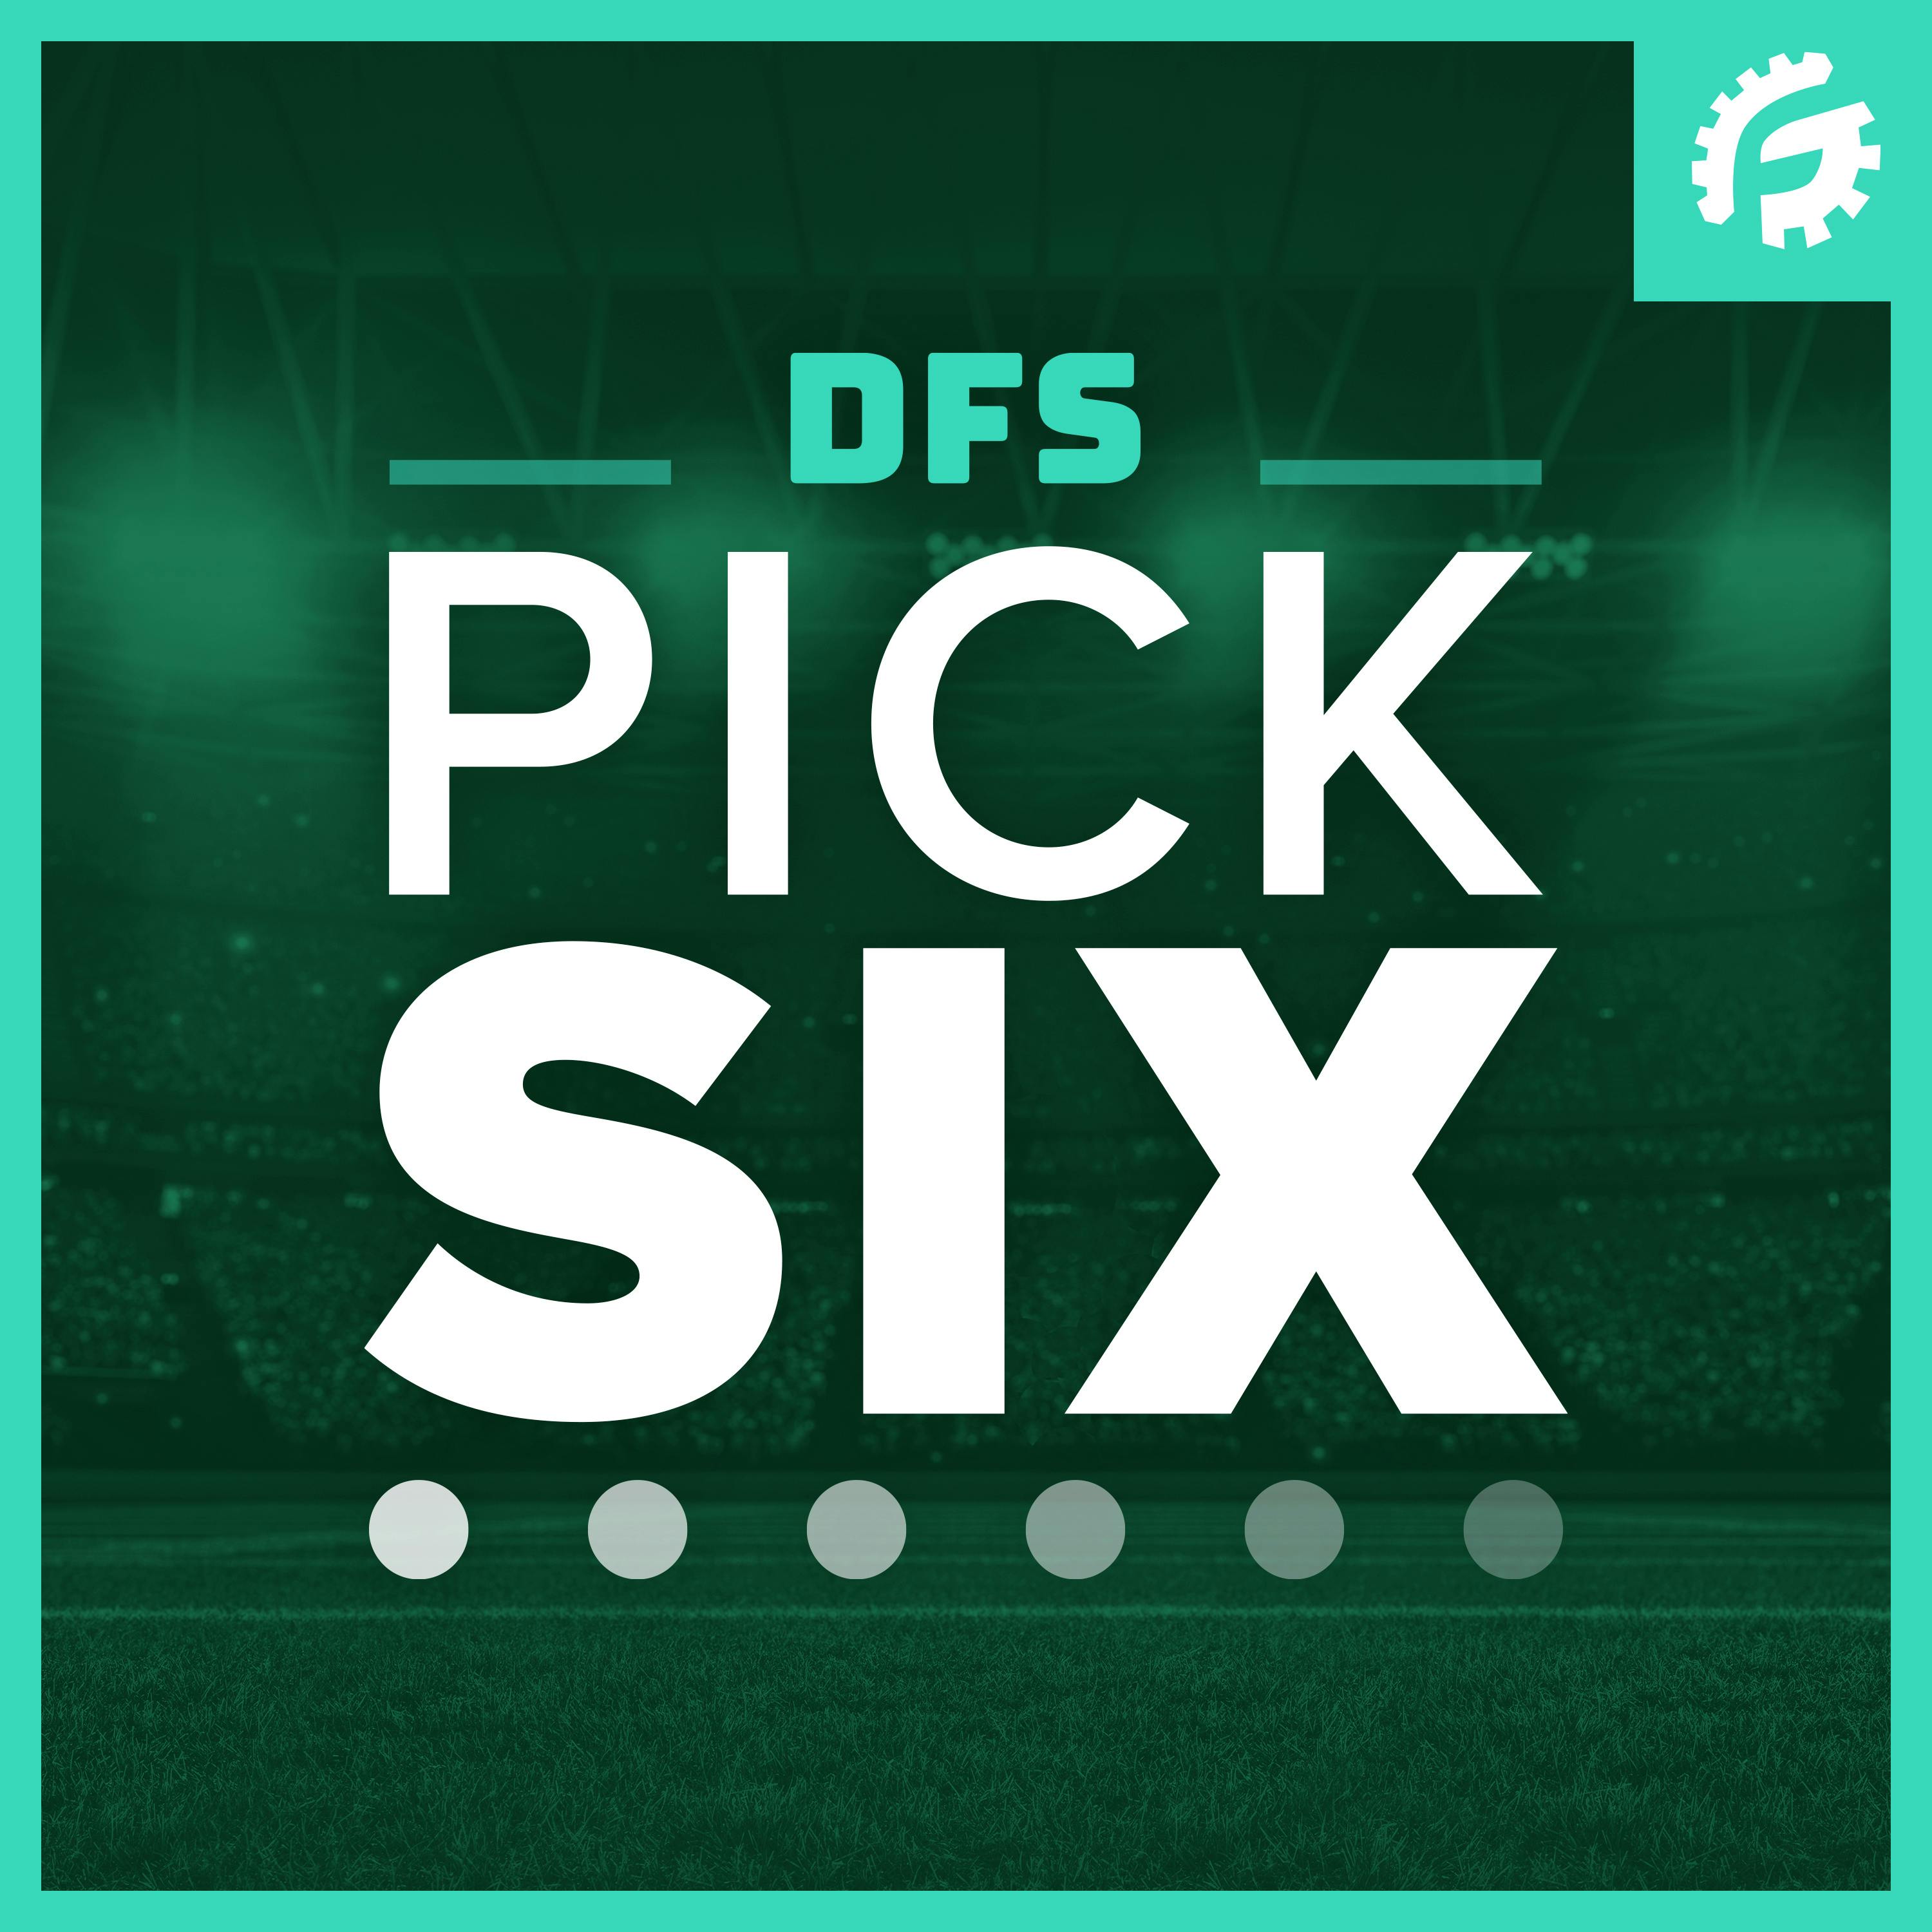 NFL DFS Pick 6 Show - Week 10